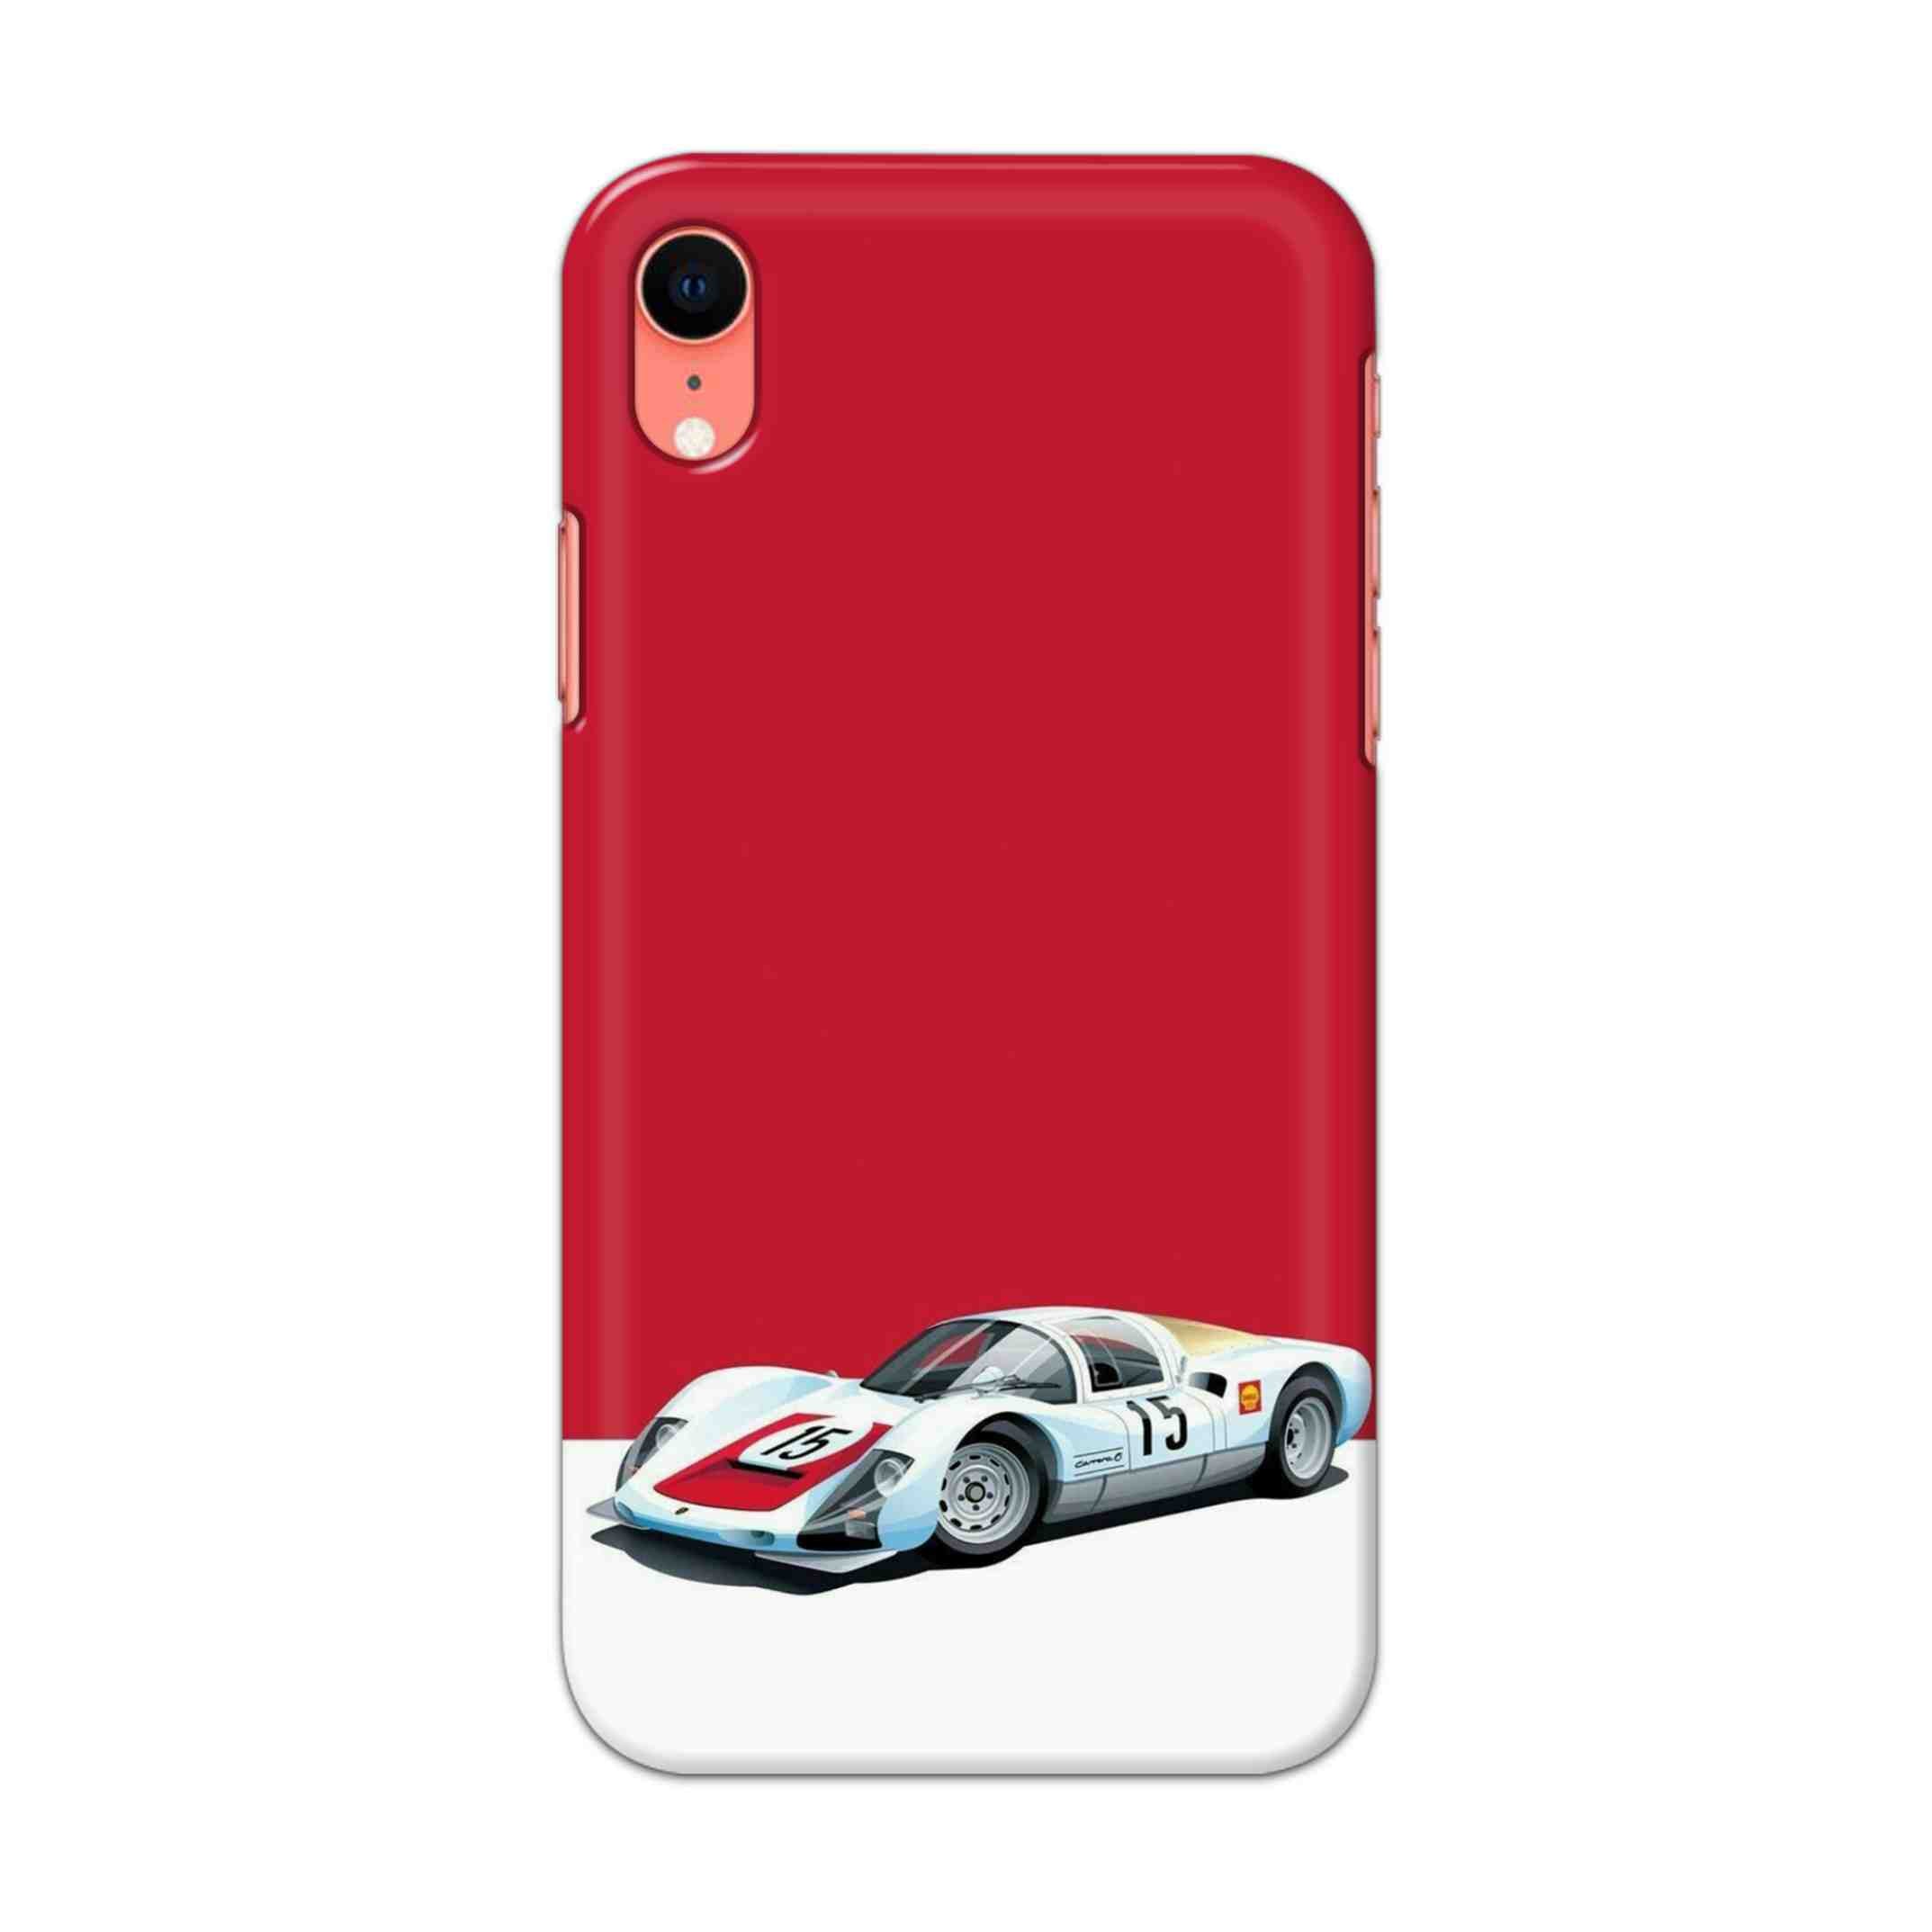 Buy Ferrari F15 Hard Back Mobile Phone Case/Cover For iPhone XR Online